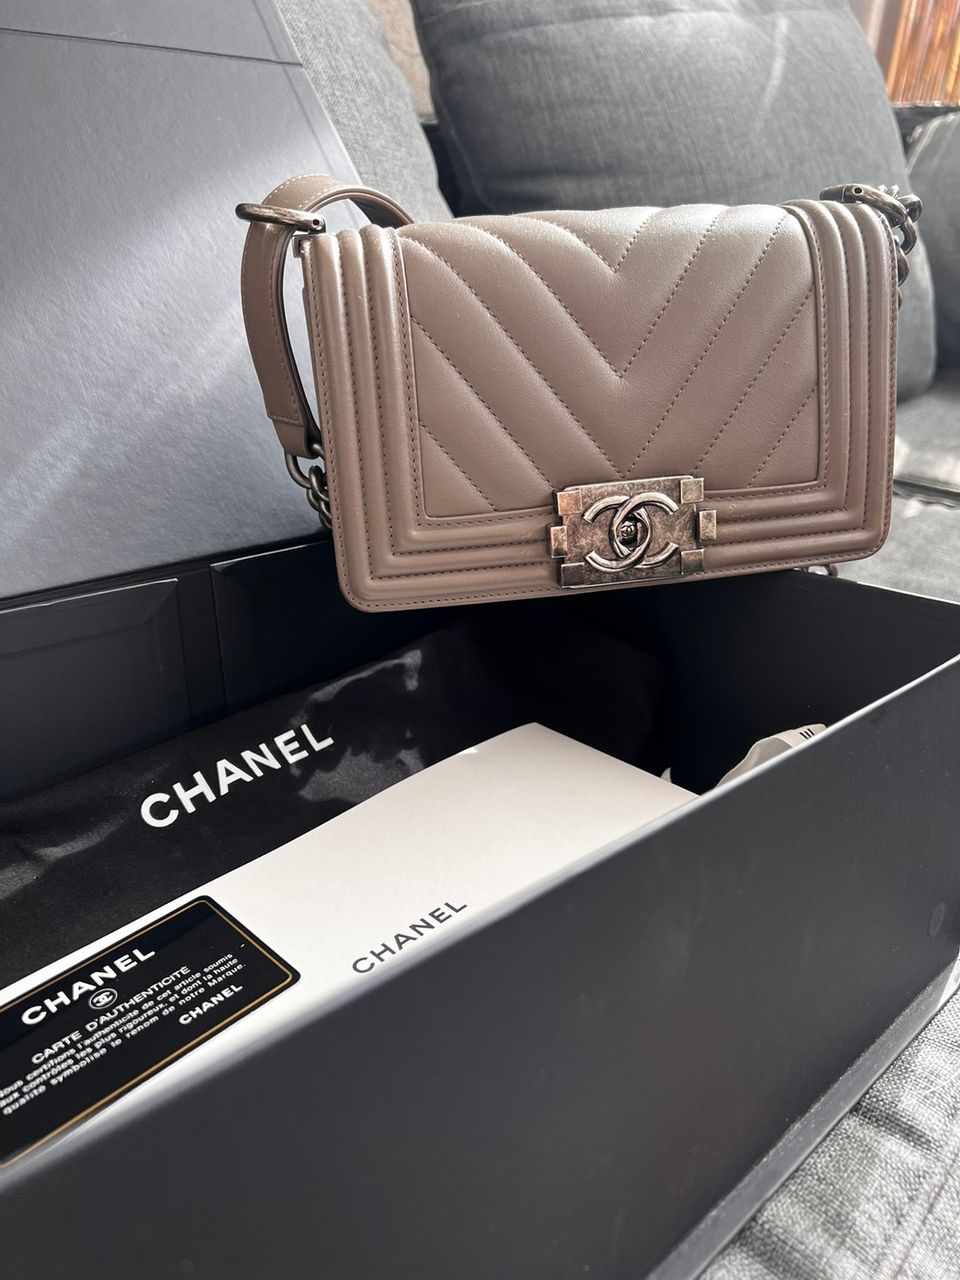 Le Boy Chanel bag